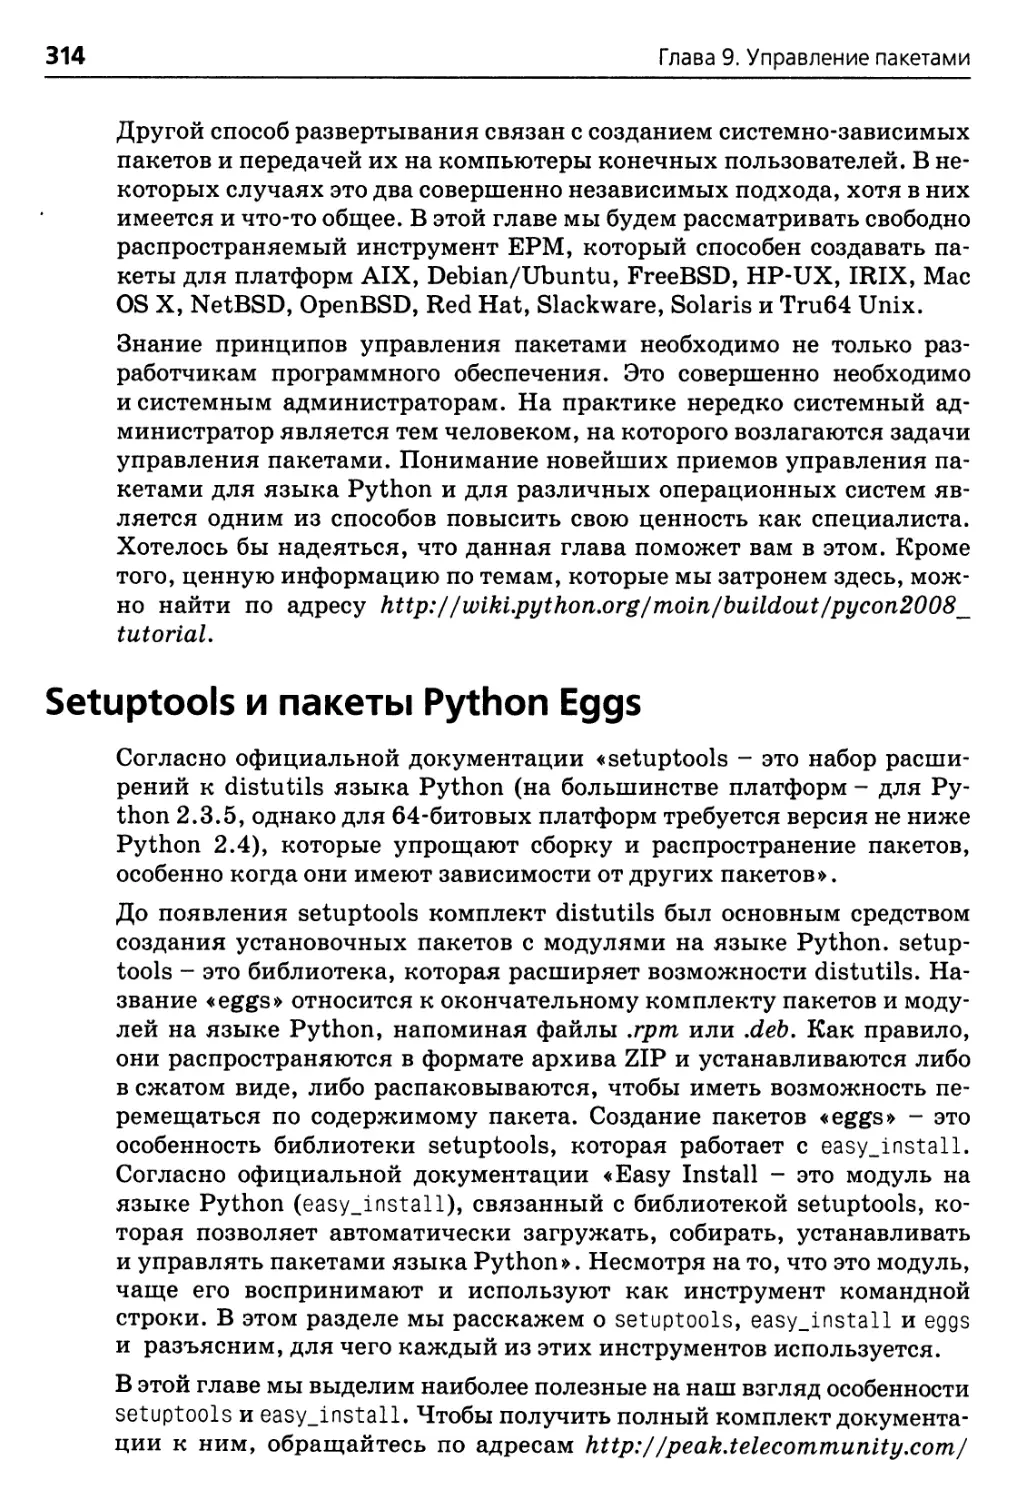 Setuptools и пакеты Python Eggs